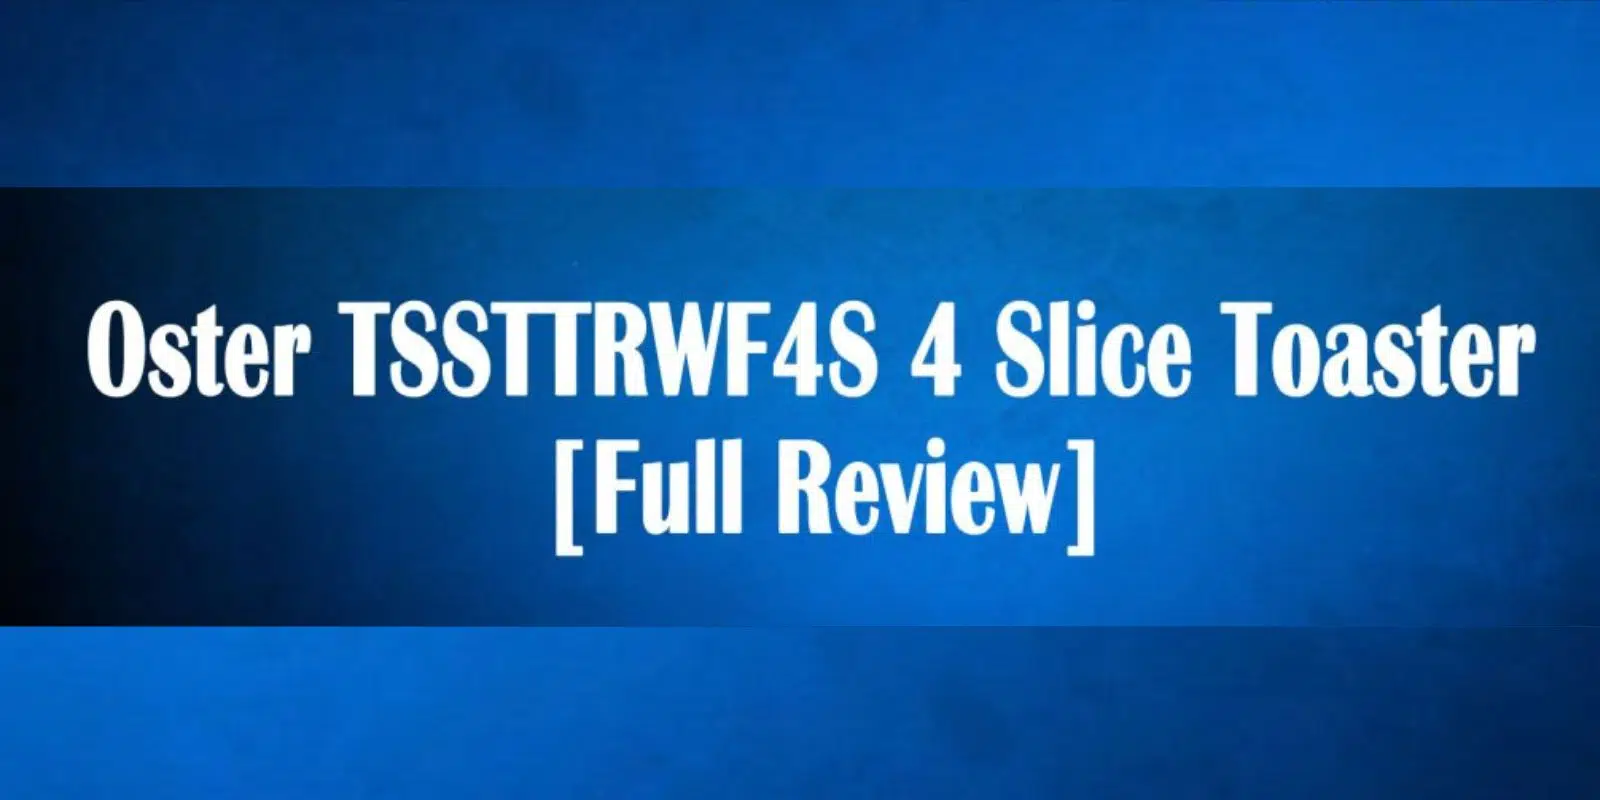 Oster TSSTTRWF4S 4 Slice Toaster [Full Review] – Buyer’s Guide